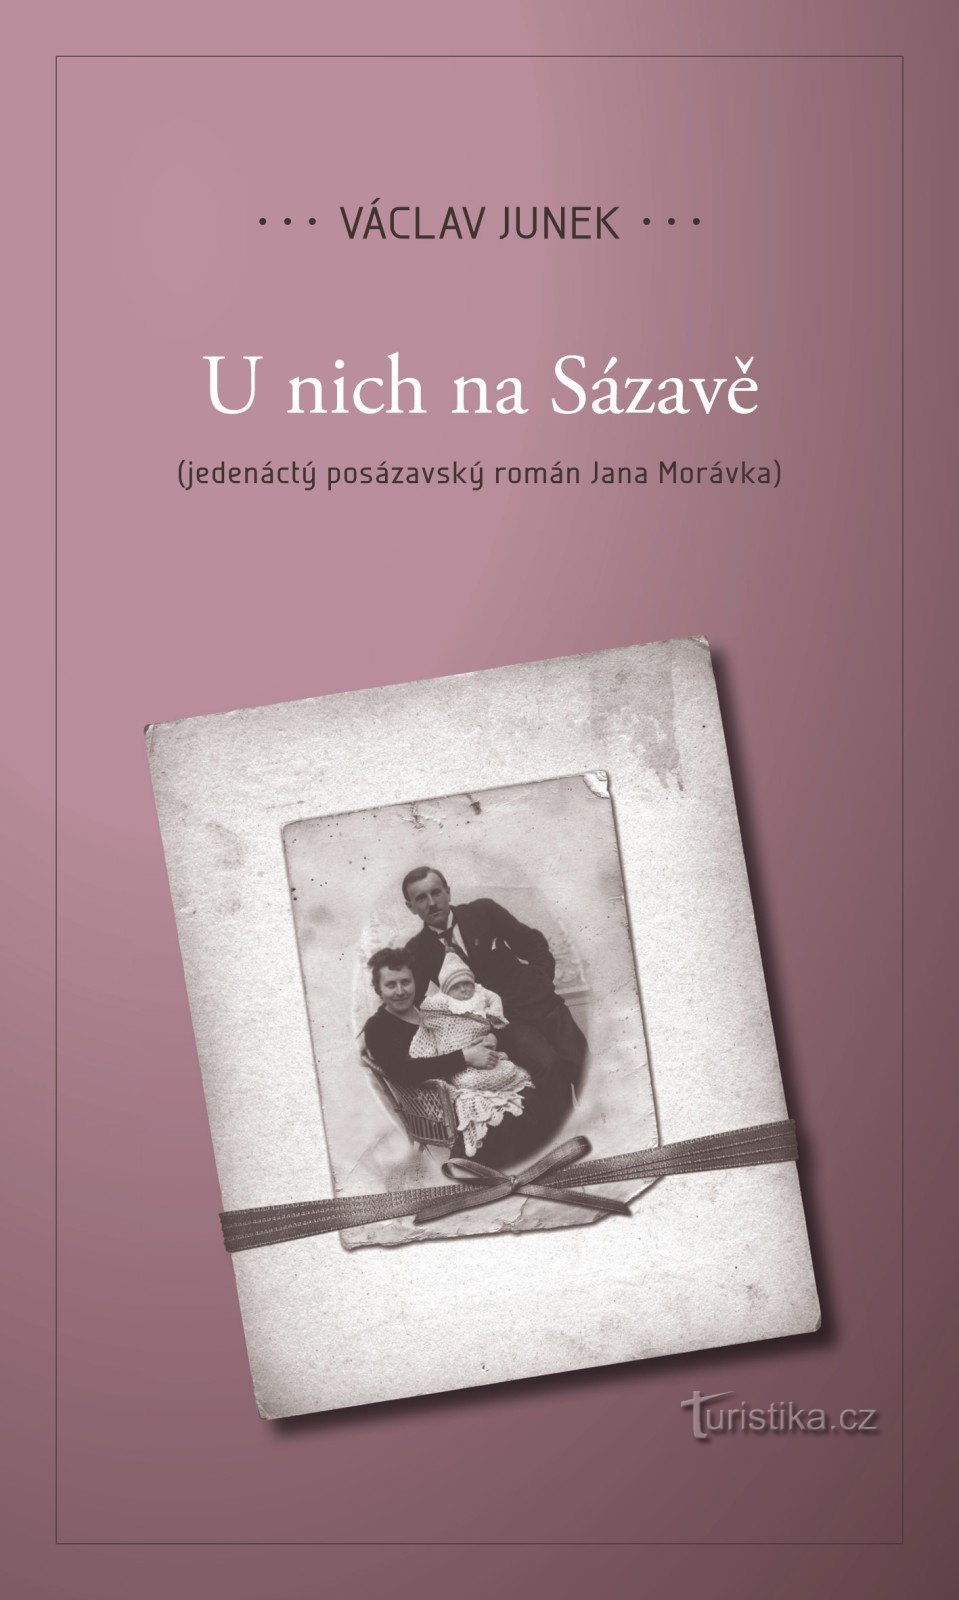 Представляем одиннадцатый роман Вацлава Юнки «У них на Сазаве».